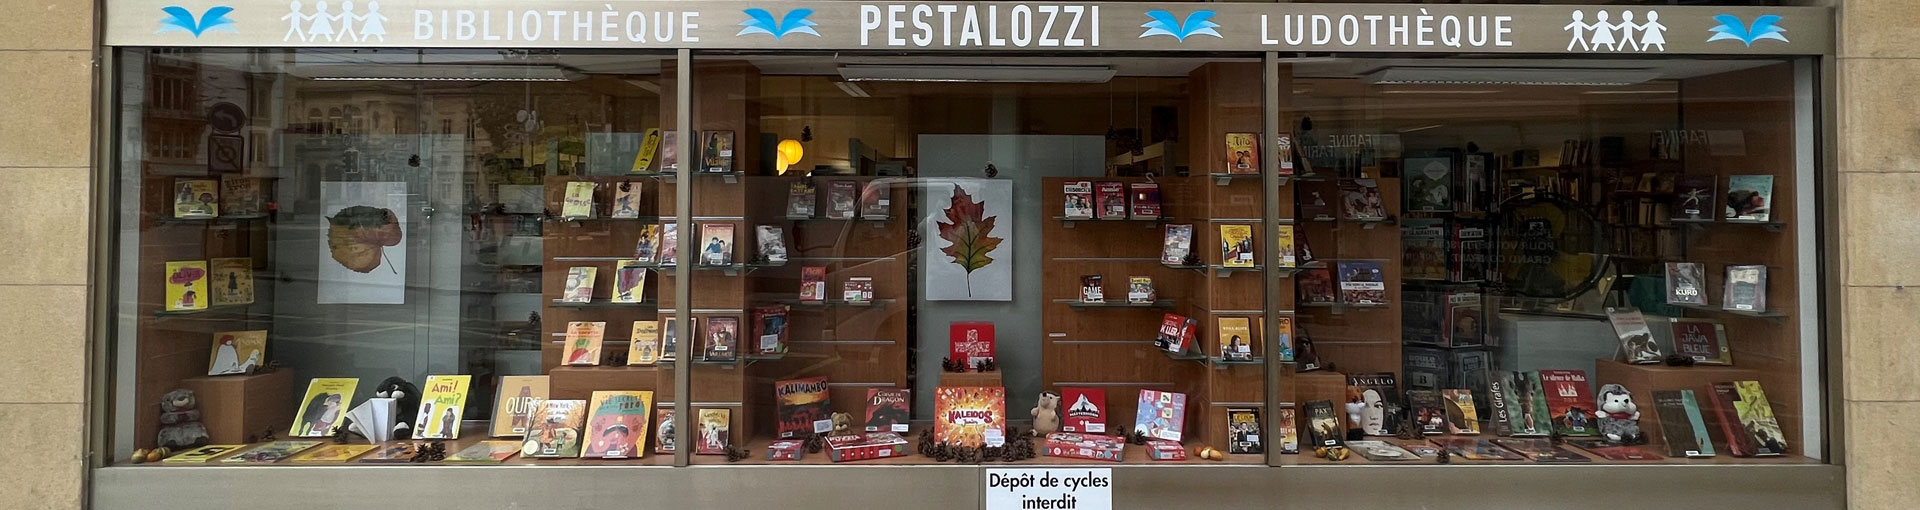 Bibliothèque Pestalozzi